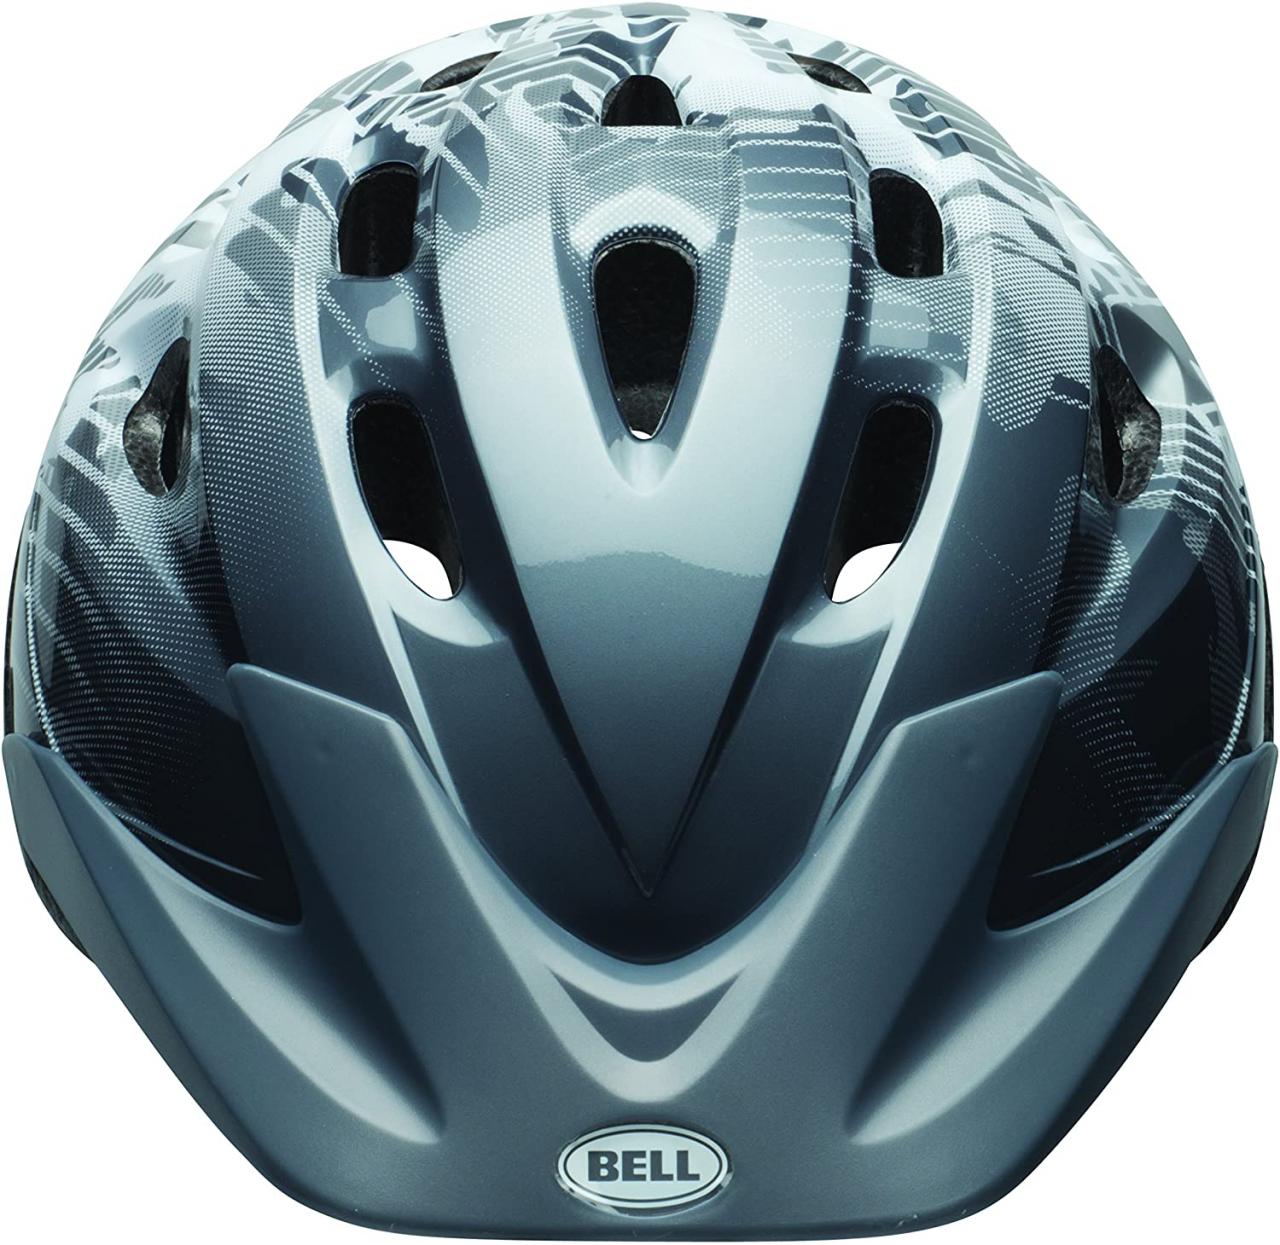 Buy Bell Rally Child Helmet Online in Hong Kong. B078H6511B